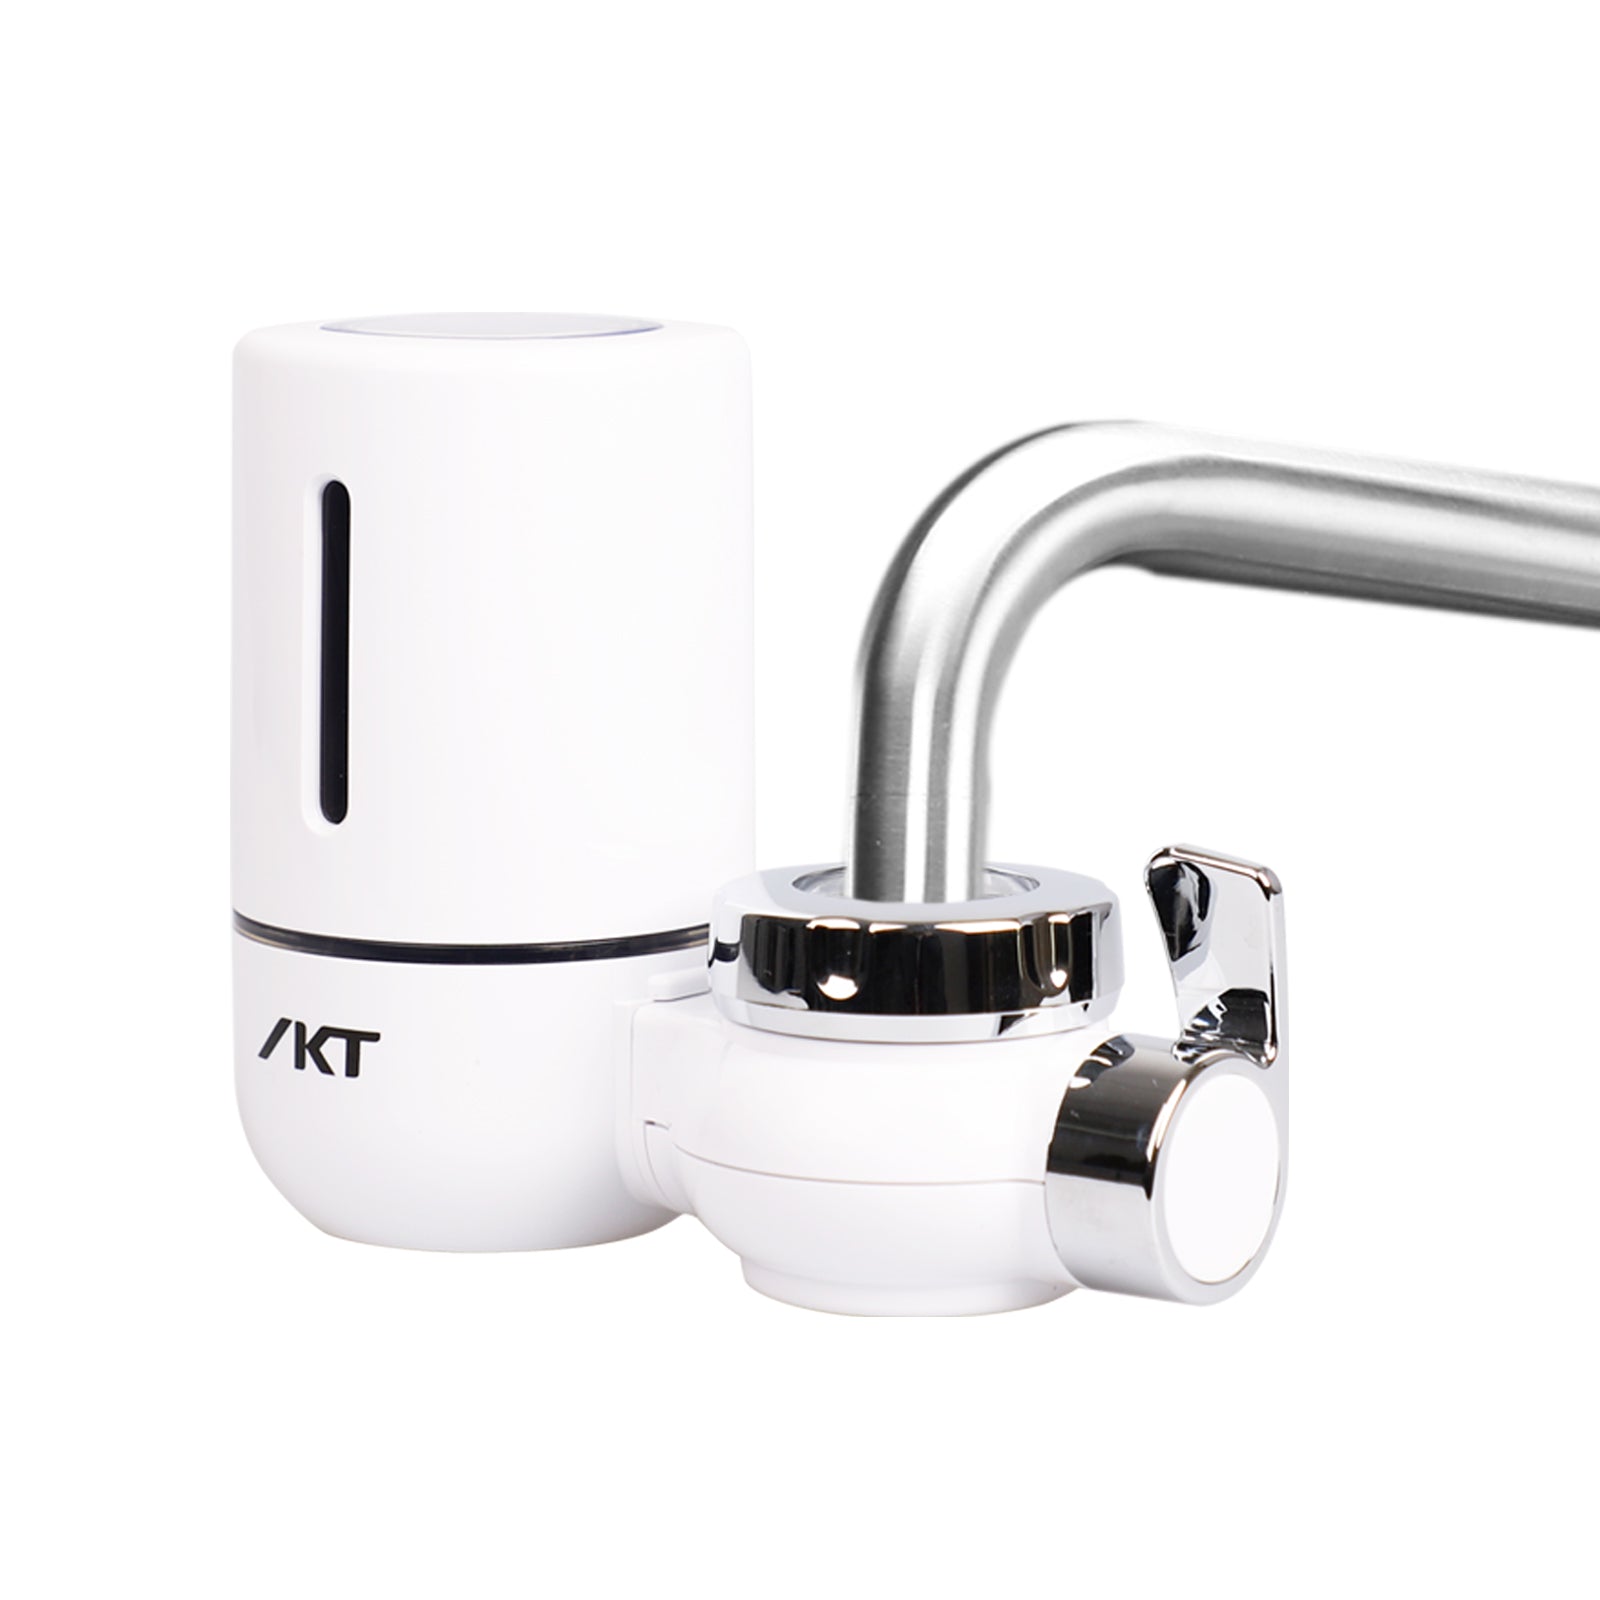 IKT Faucet water filter